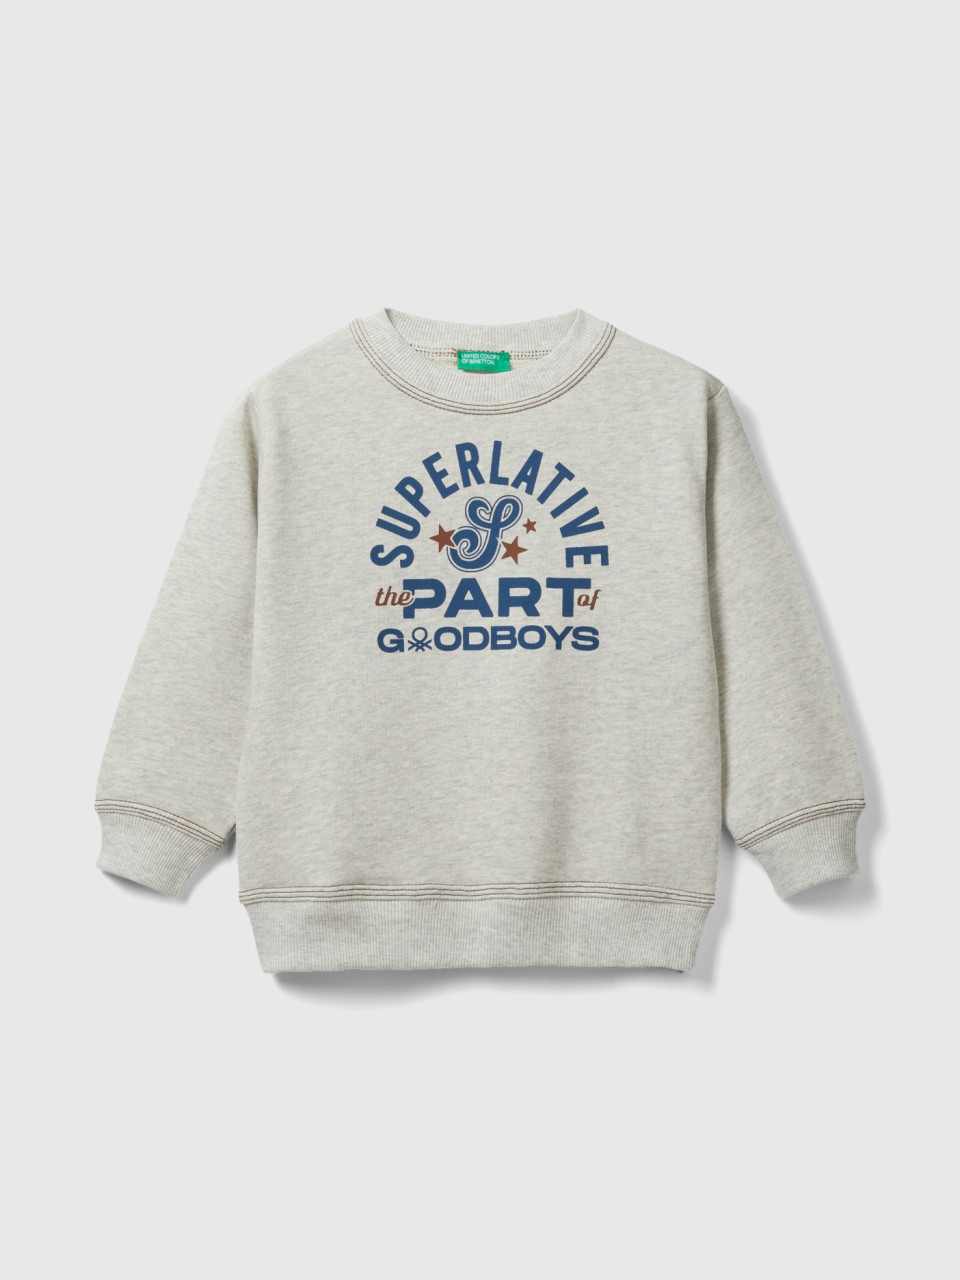 Benetton, Pullover Sweatshirt With Print, Light Gray, Kids